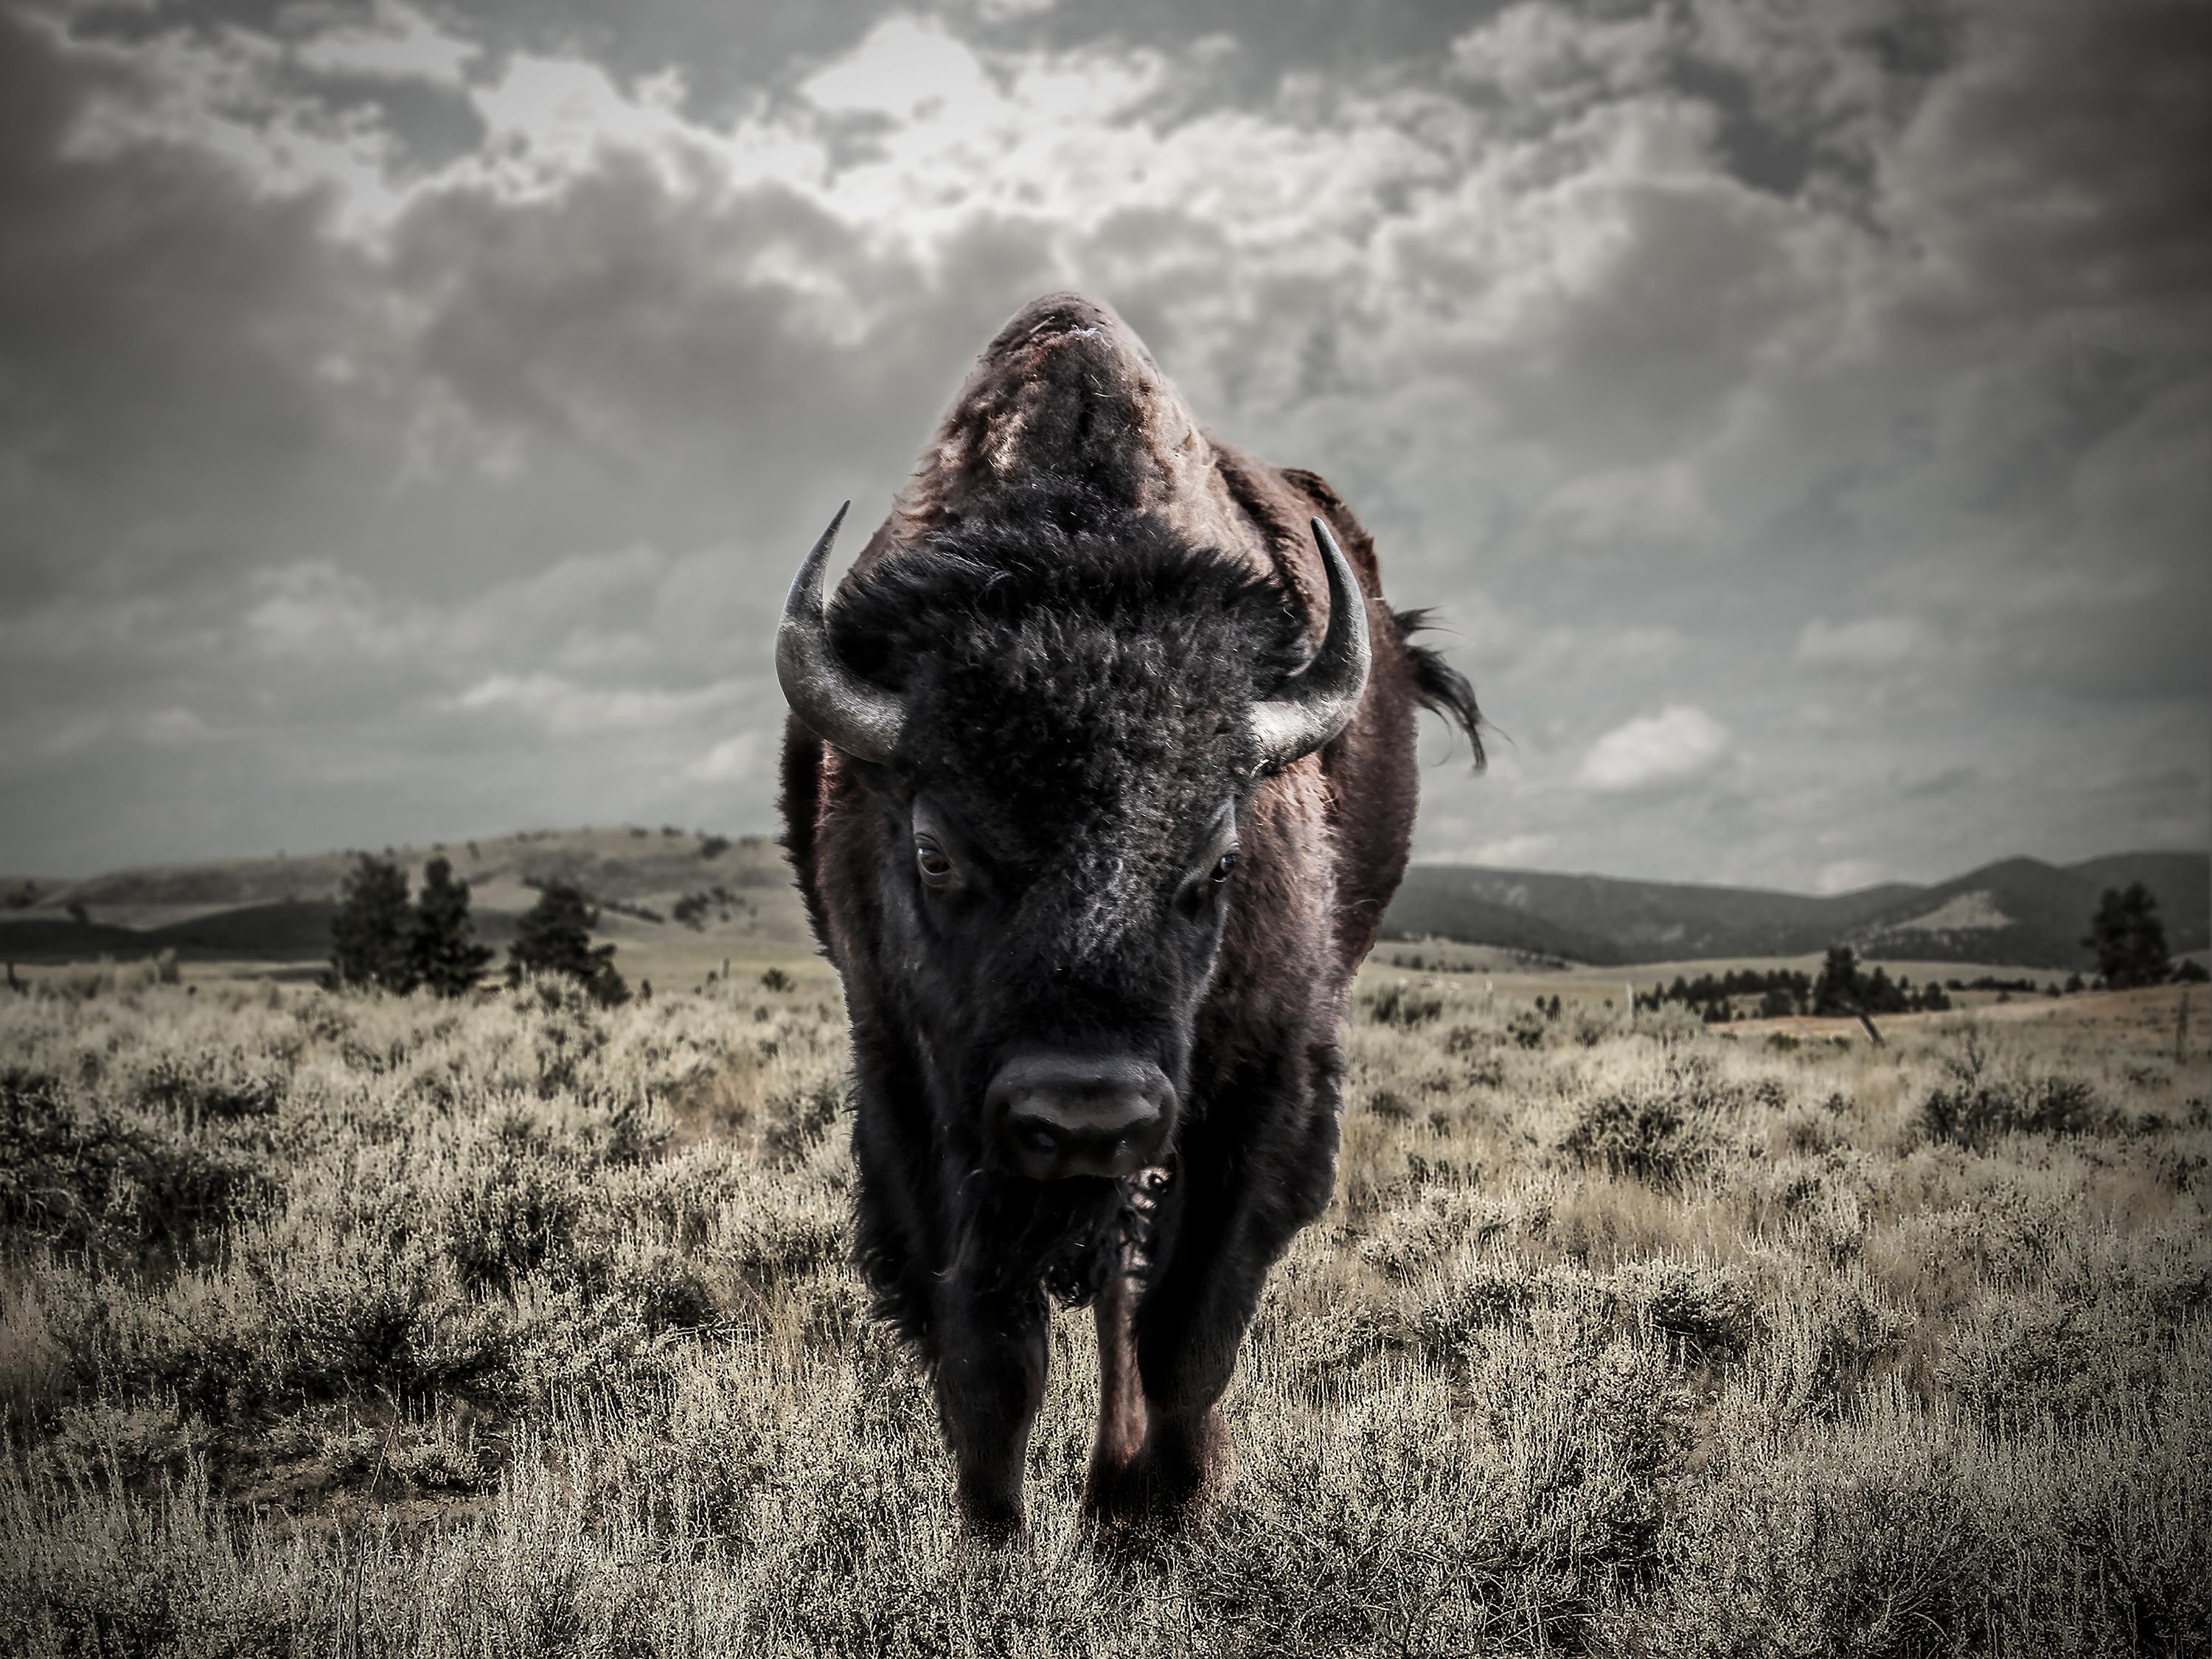 Shane Russeck Animal Print - "Bison" 40x50 -  Bison Photography Unsigned Photograph Buffalo Print Buffalo Art